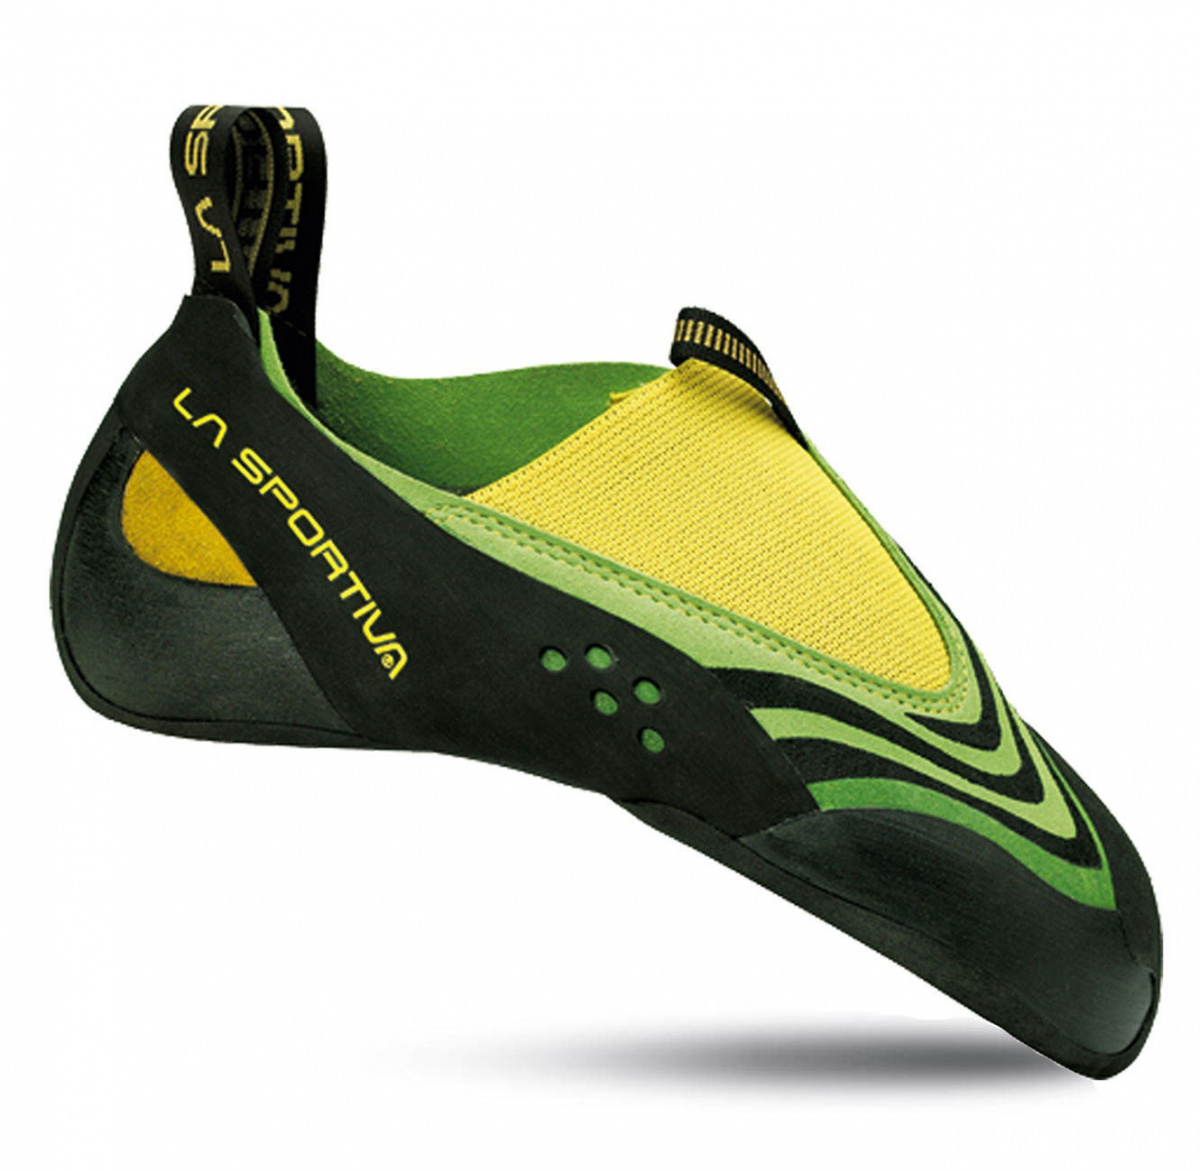 Lezečky La Sportiva Speedster green/yellow 42,5 EU